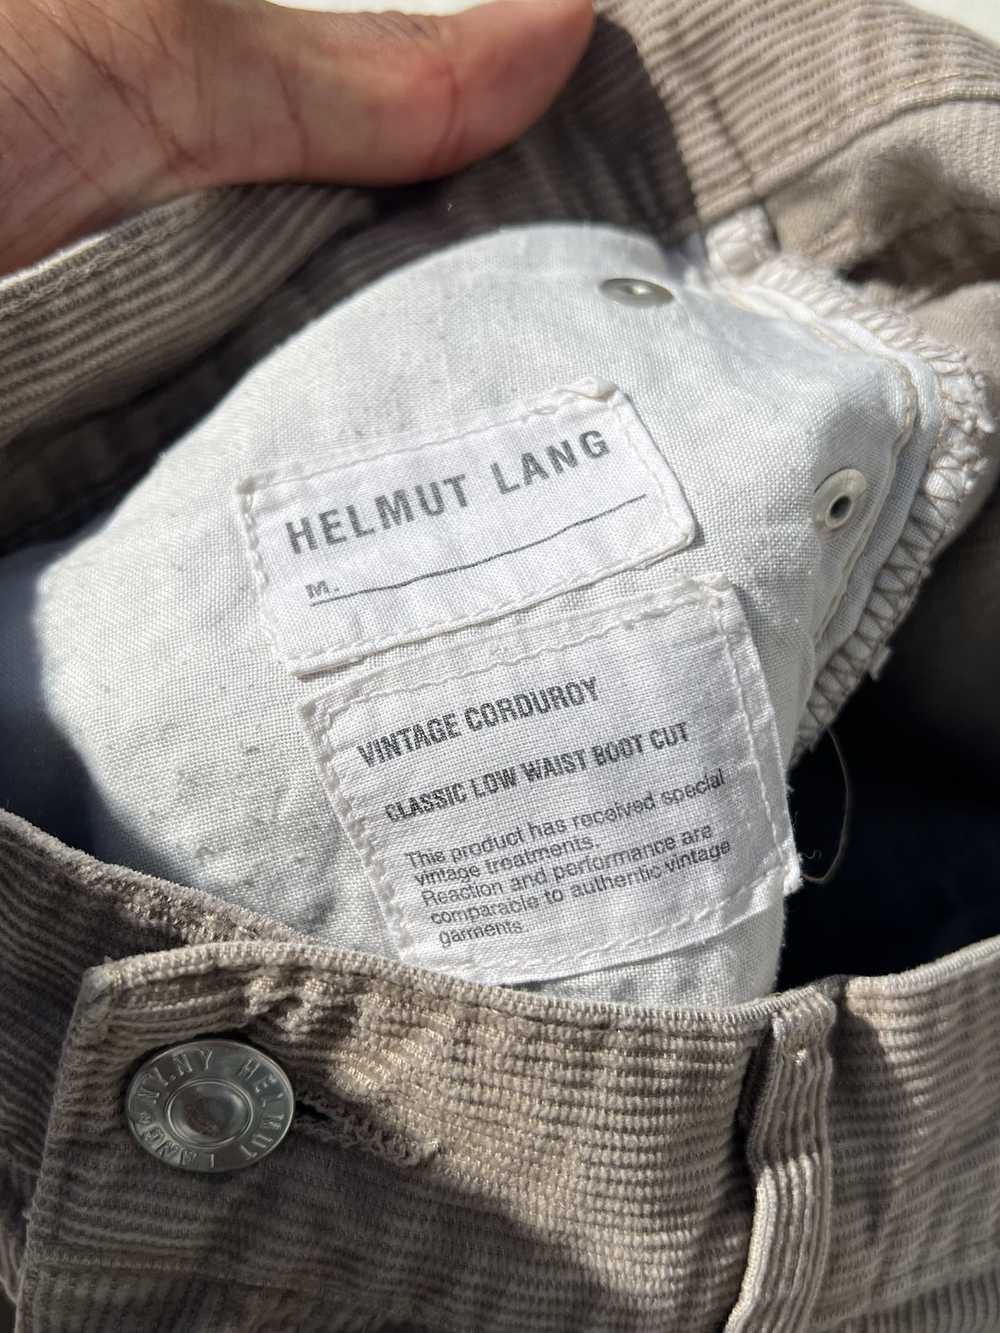 Helmut Lang Helmut Lang Vintage Corduroy Pants - image 4